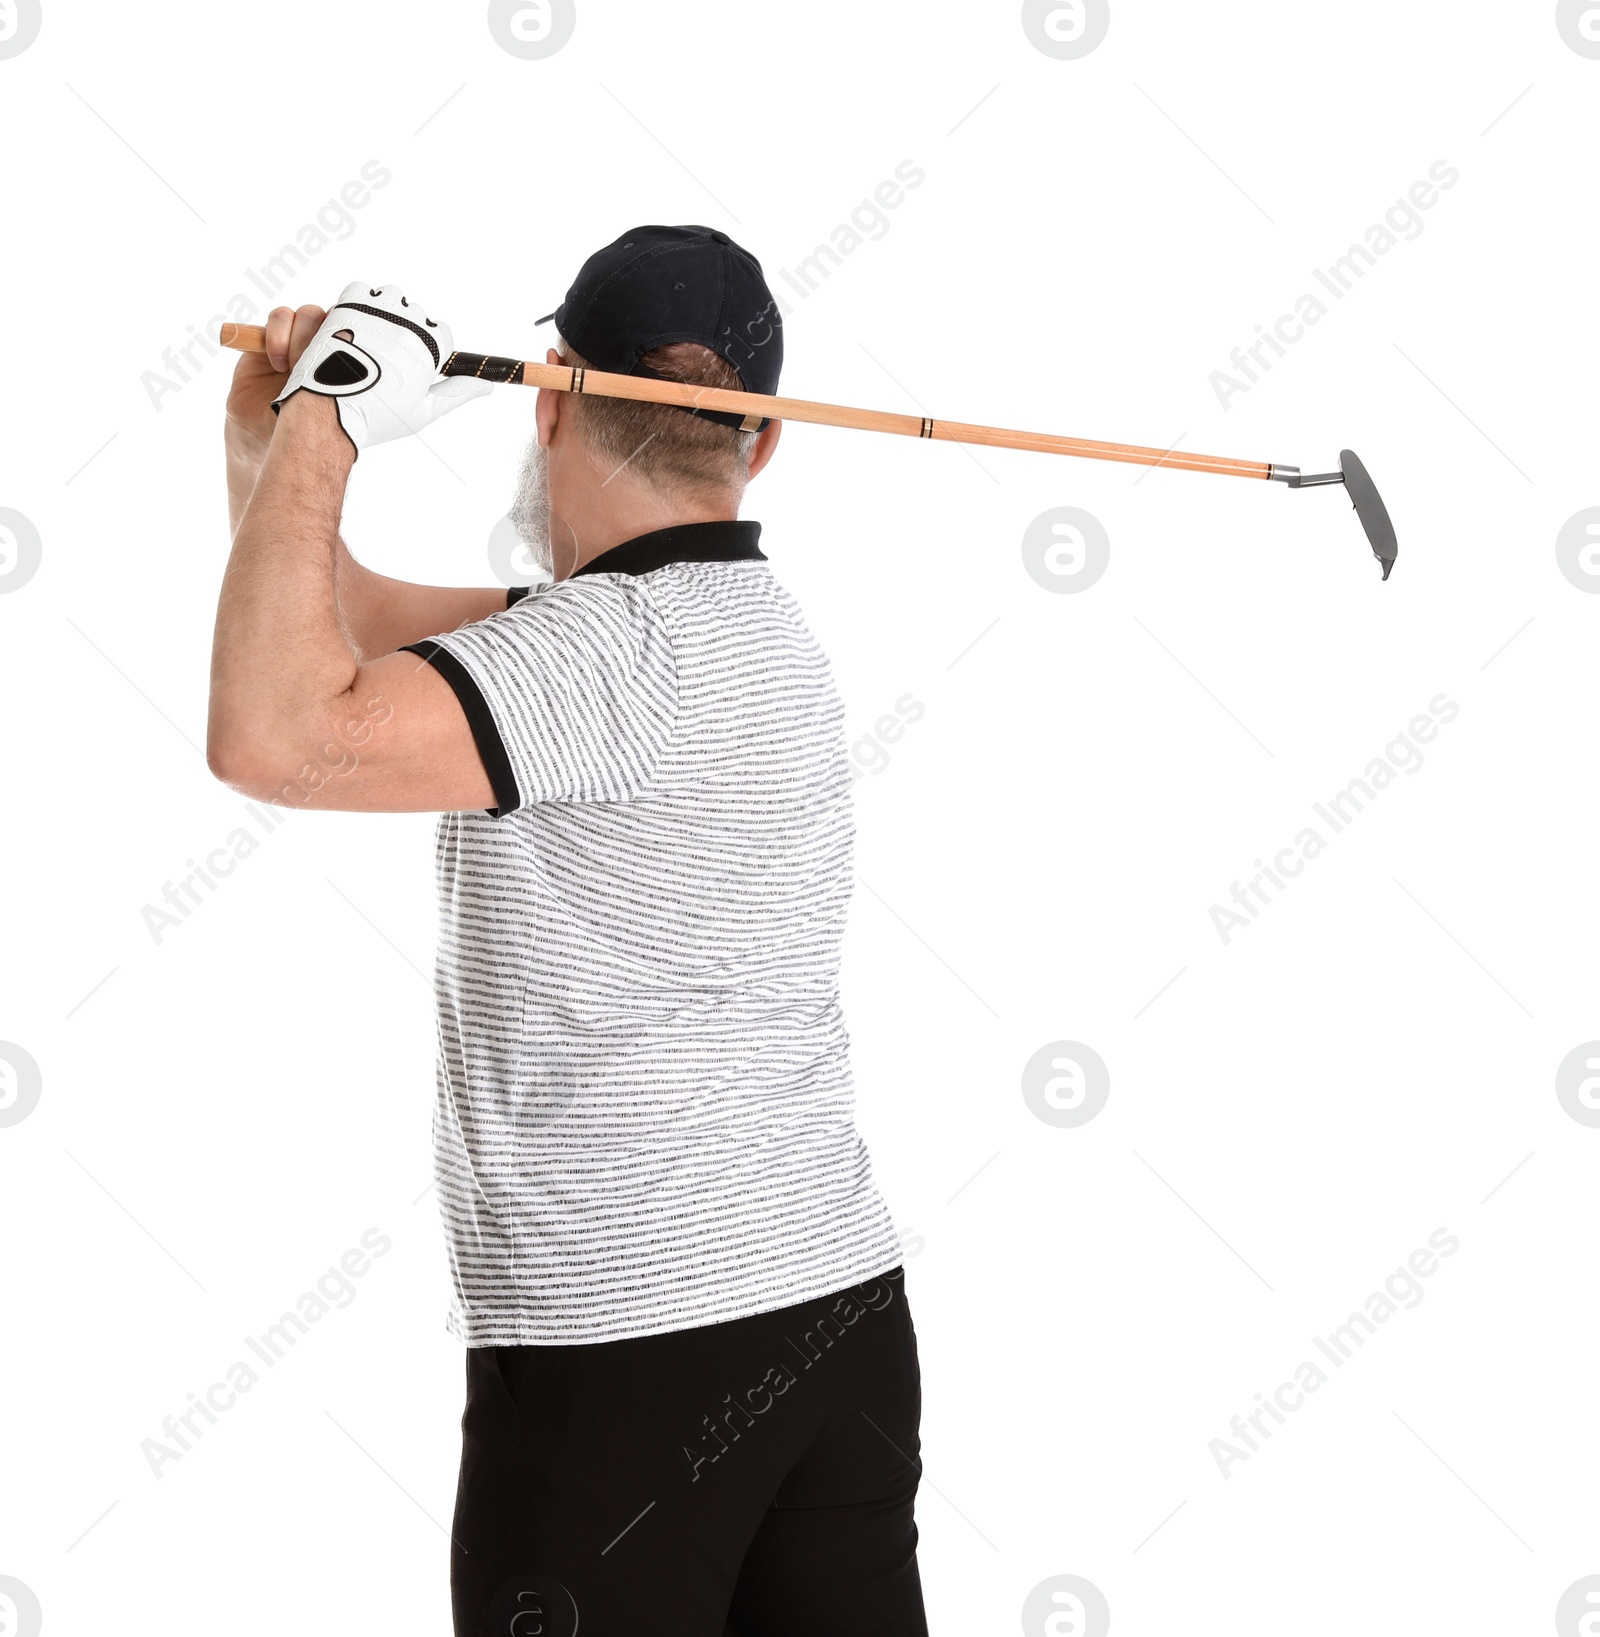 Photo of Senior man playing golf on white background